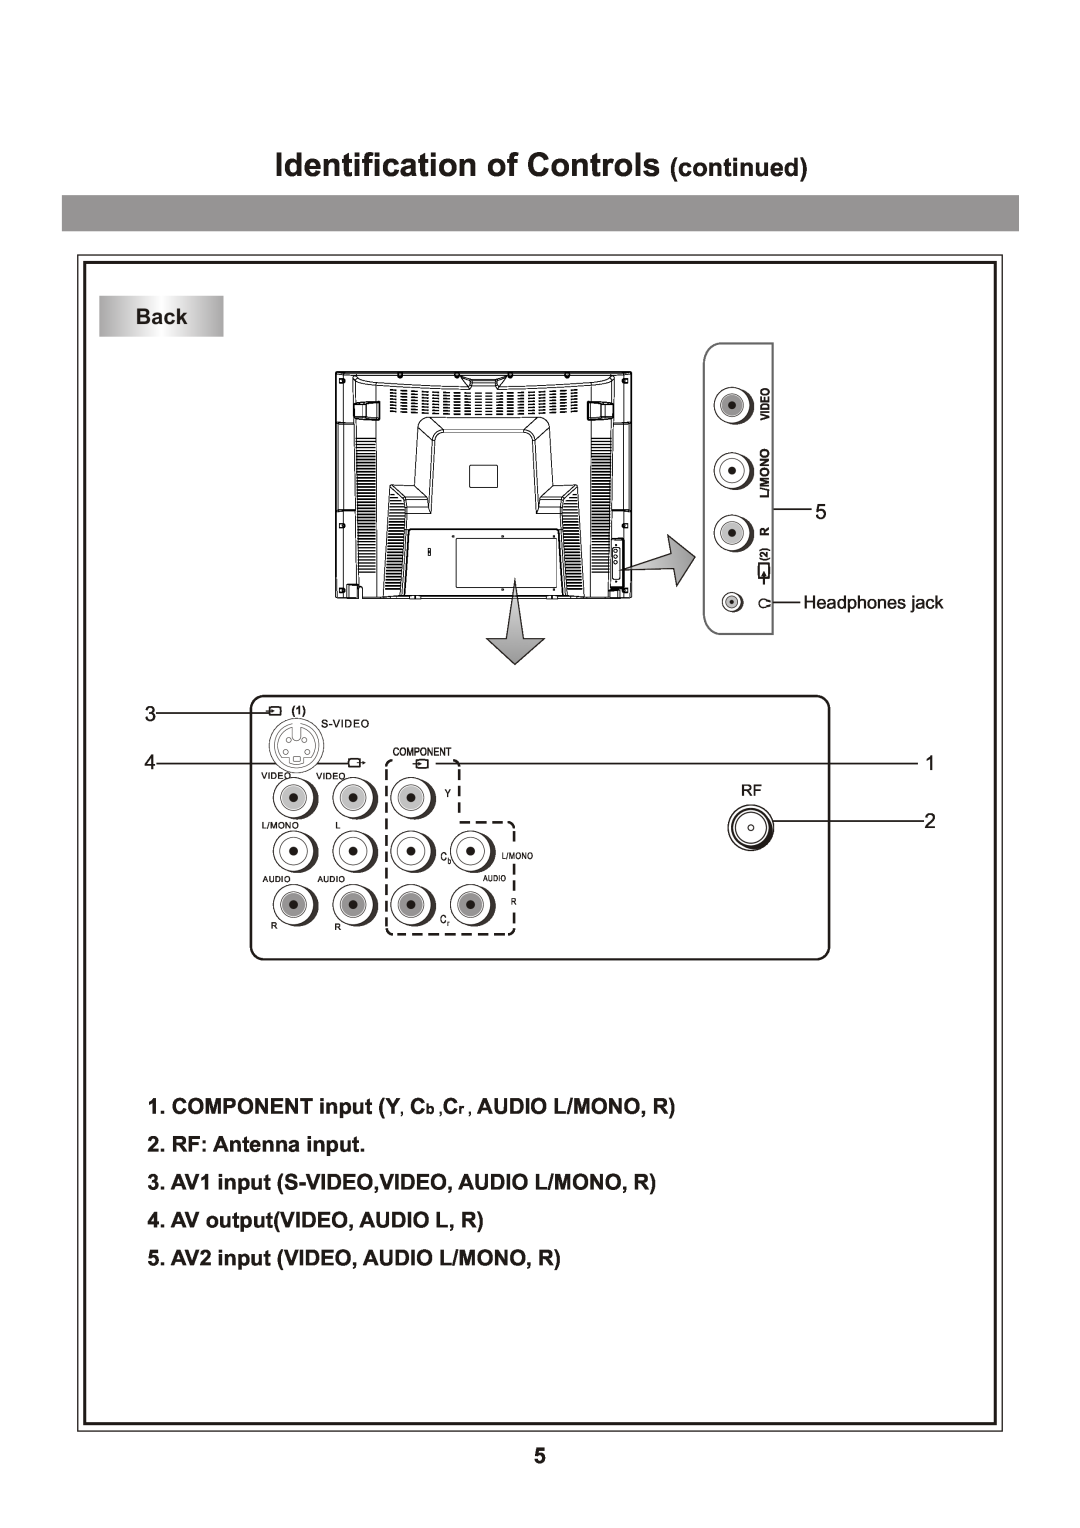 Memorex Flat Screen Tv Identification of Controls continued, Back, 3. AV1 input S-VIDEO,VIDEO, AUDIO L/MONO, R, L/Mono 